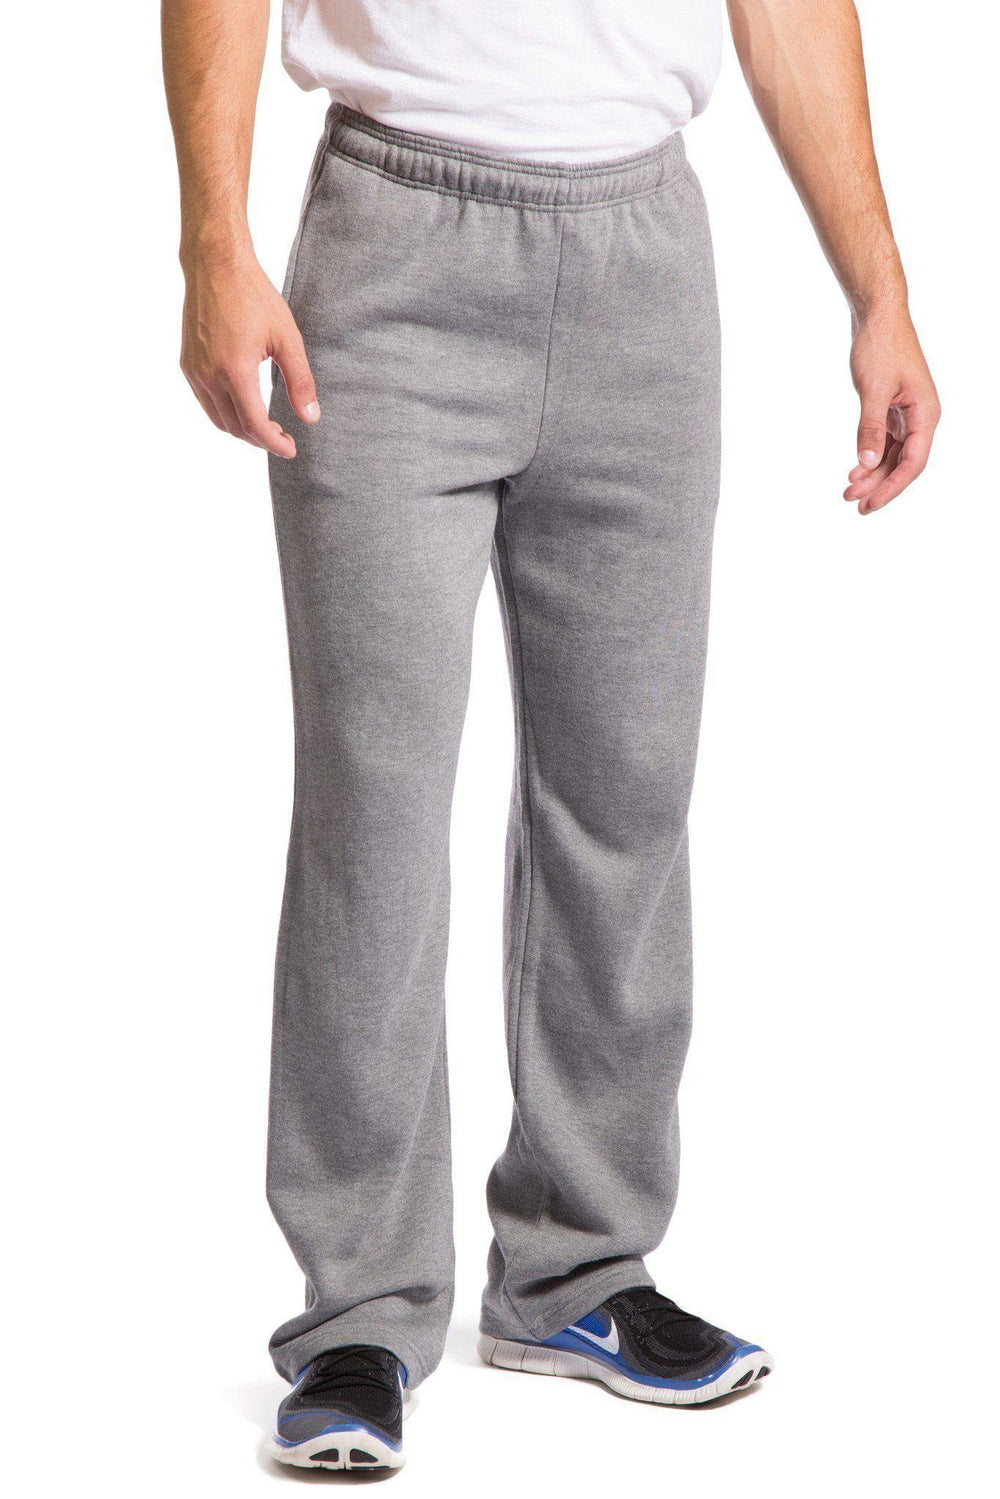 Men's Lounge Pants | Mens Cotton Fleece Sweatpants | Fishers Finery